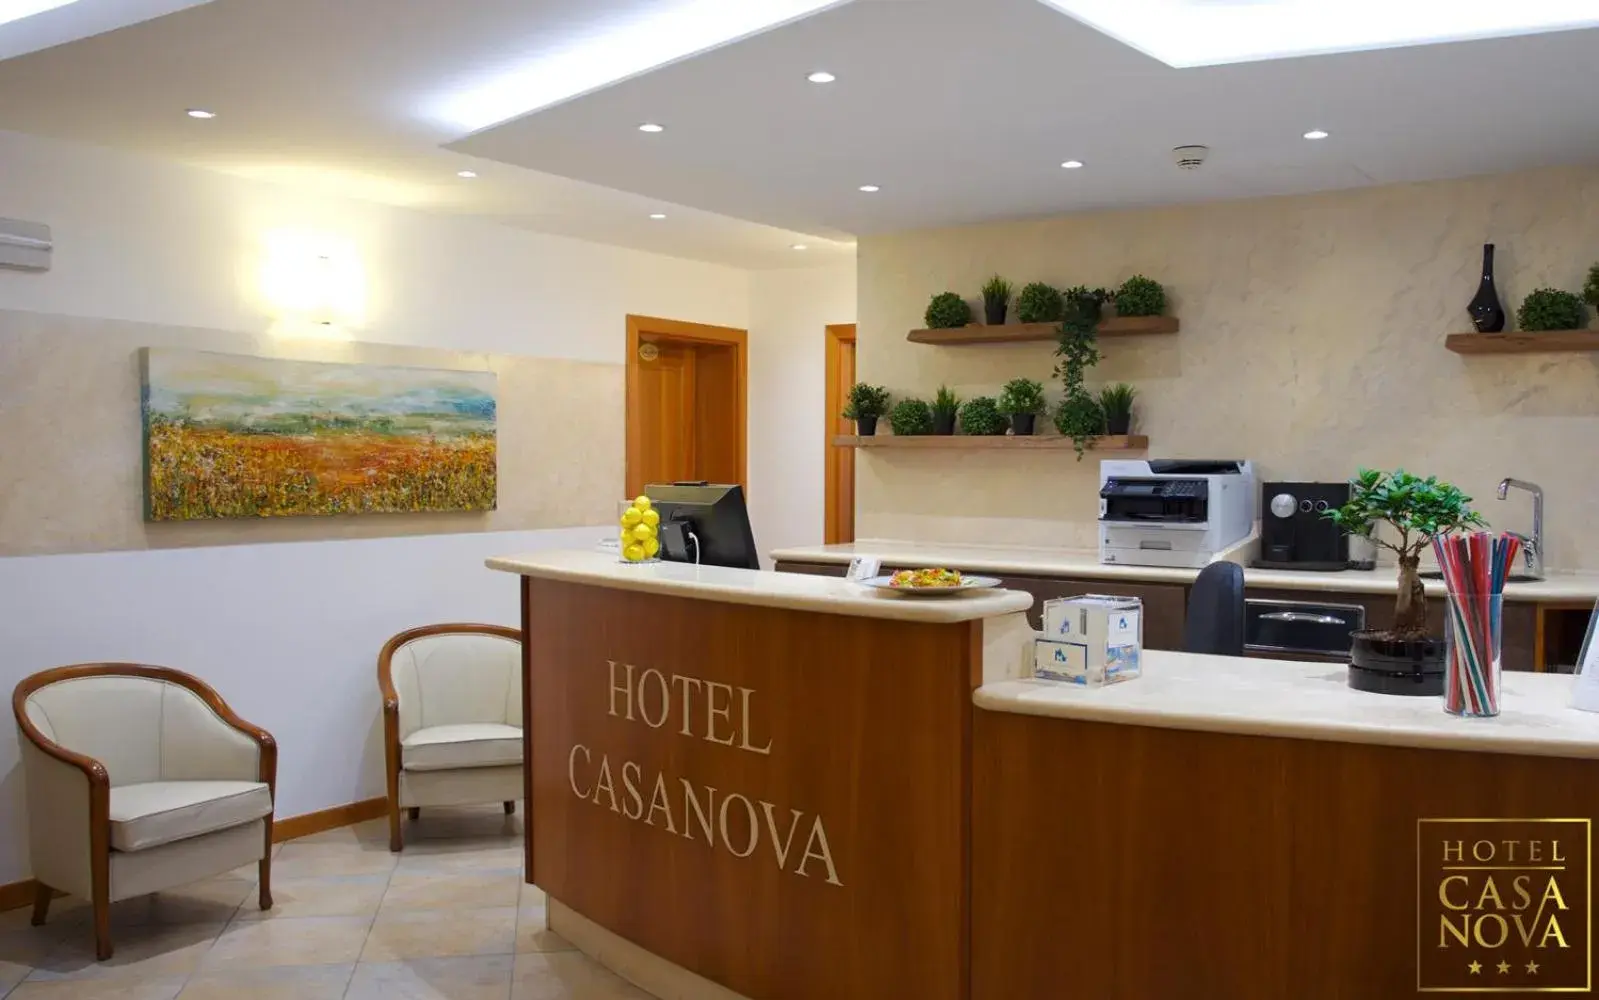 Property logo or sign, Lobby/Reception in Hotel Casanova